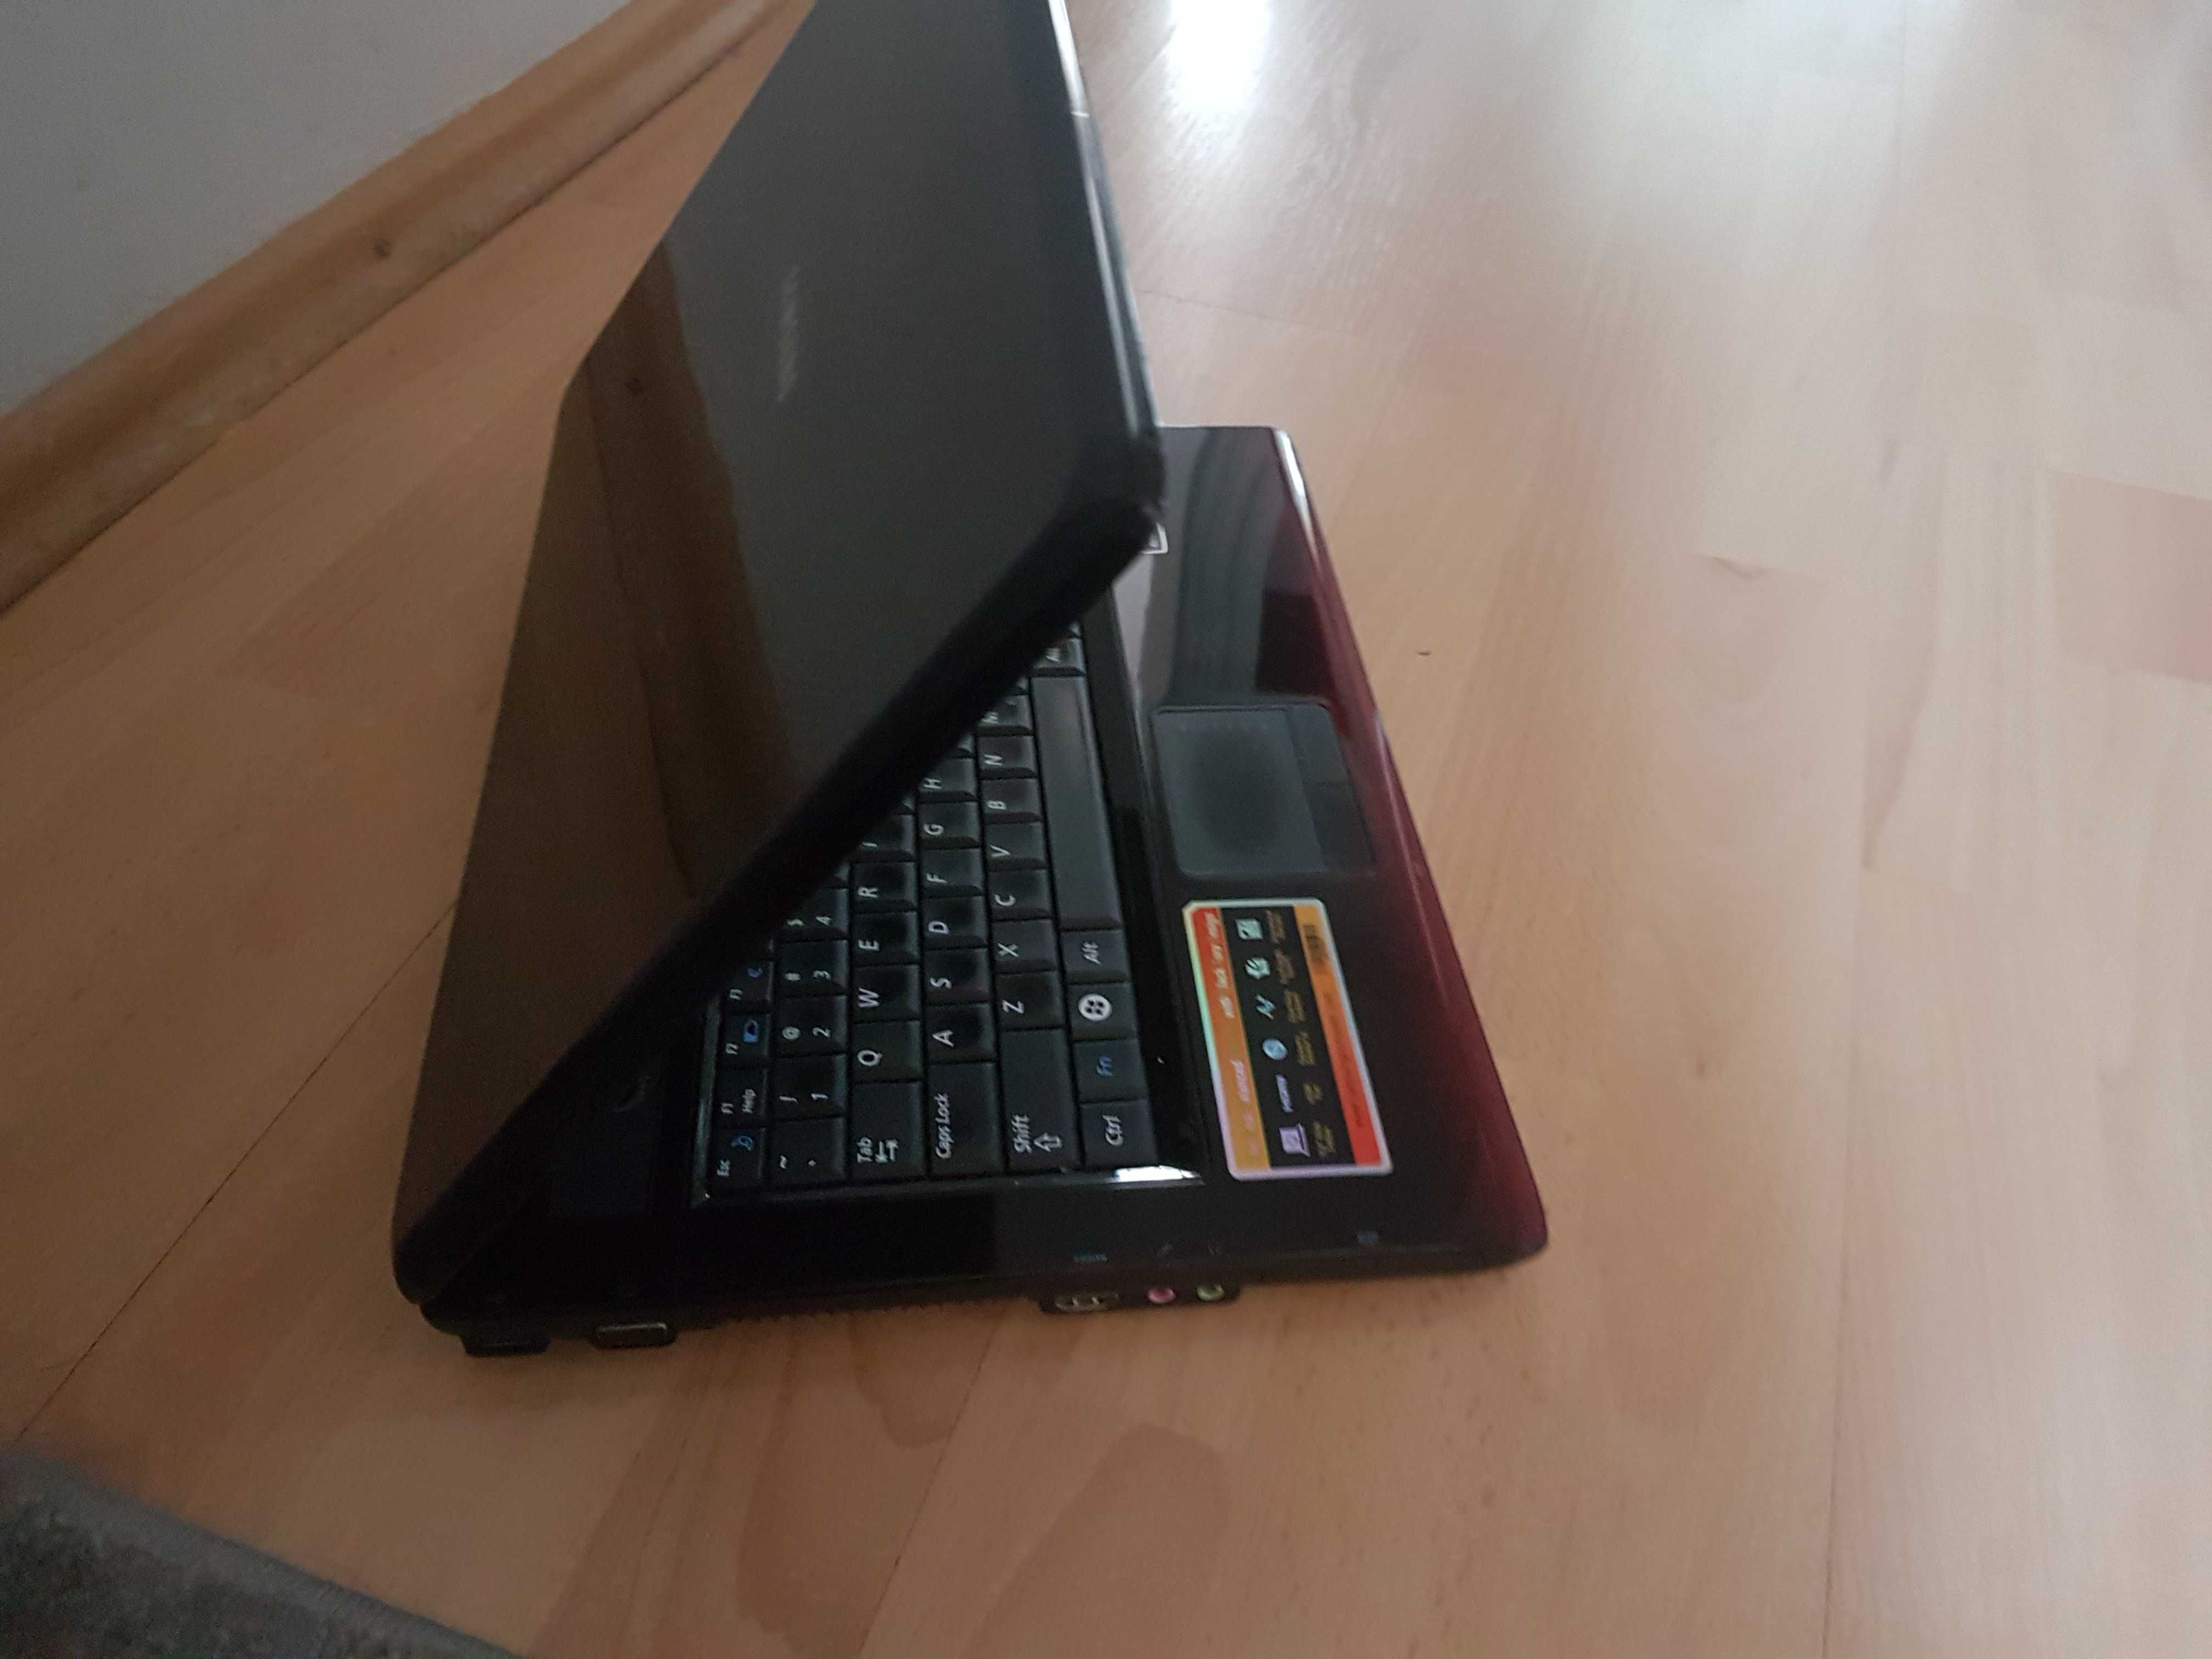 Laptop   Samsung